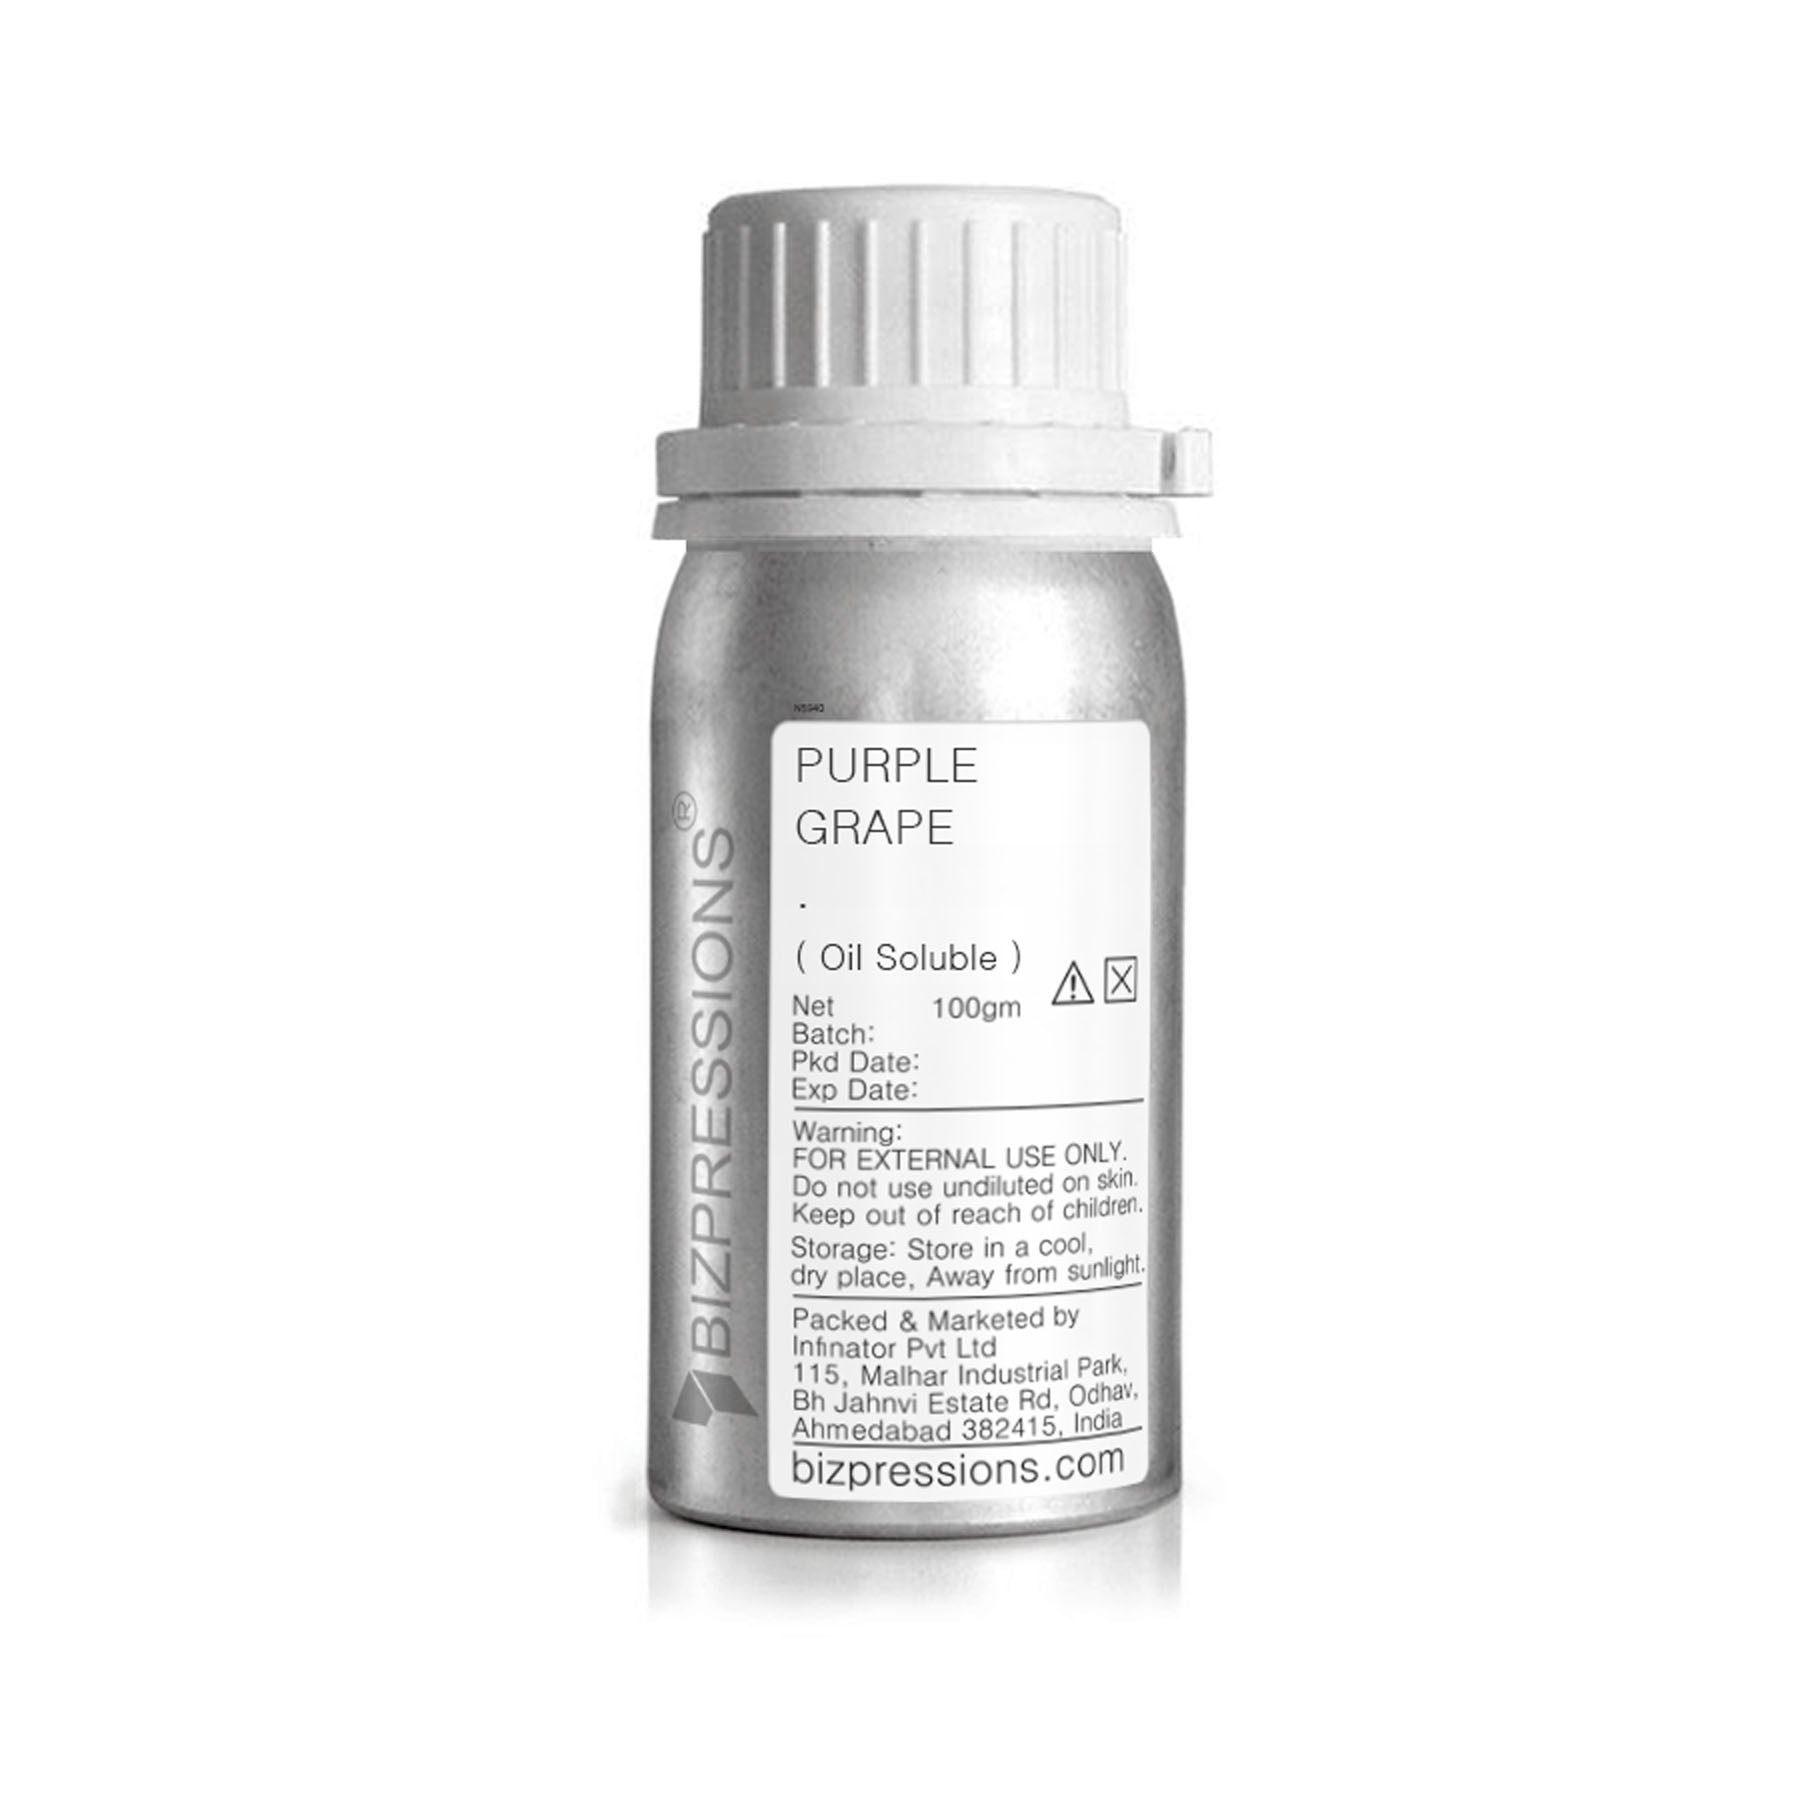 PURPLE GRAPE - Fragrance ( Oil Soluble ) - 100 gm